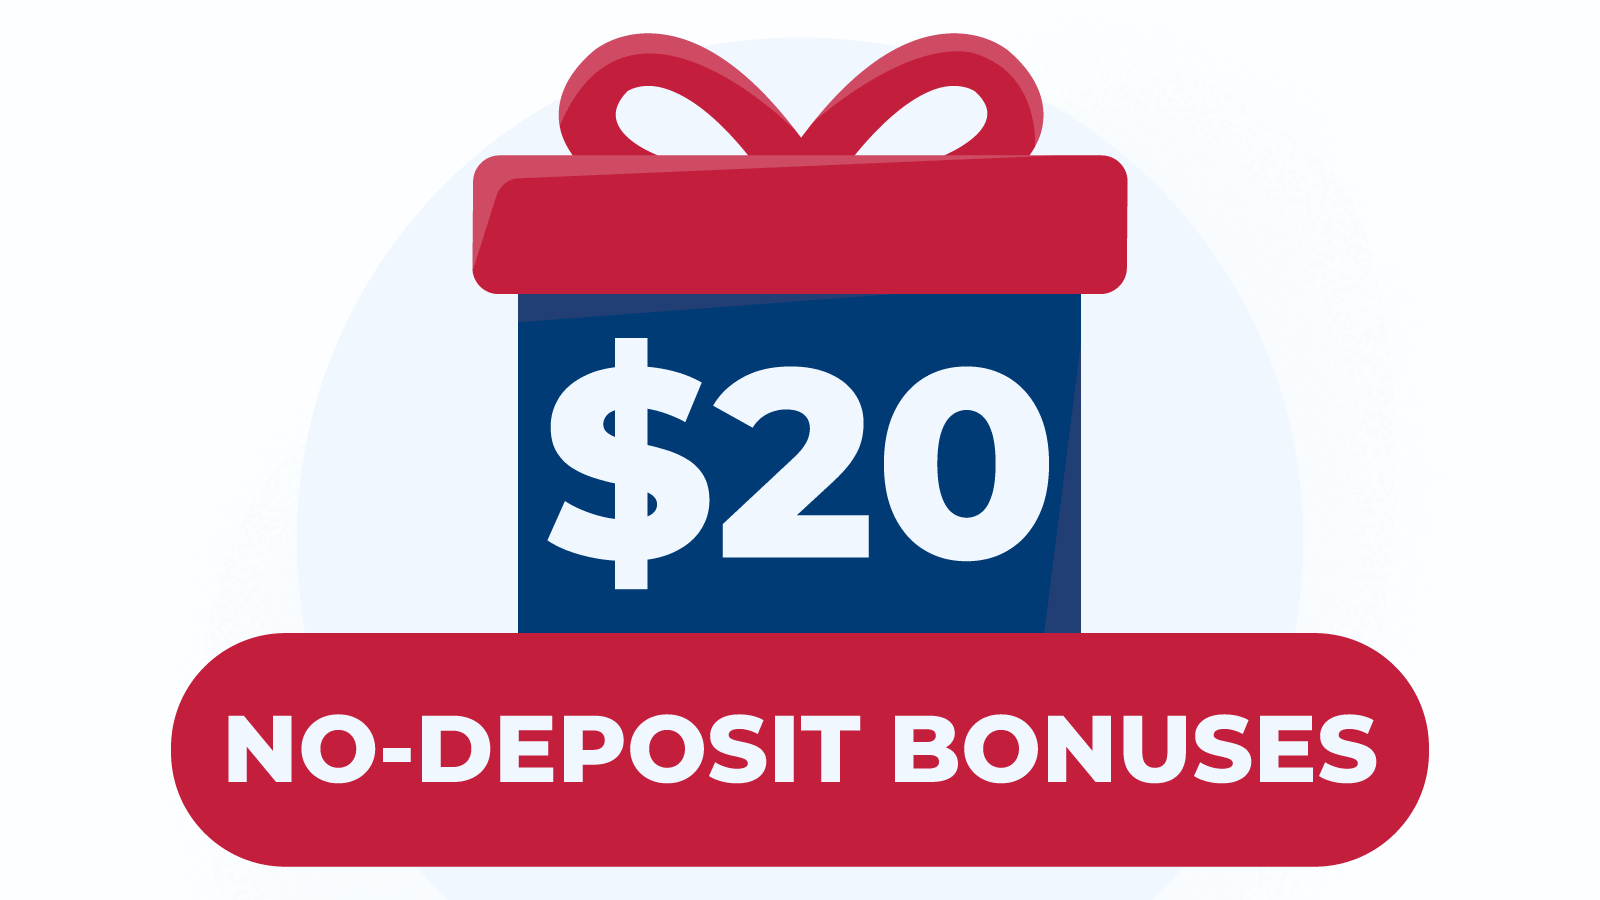 ¥20 no-deposit bonuses